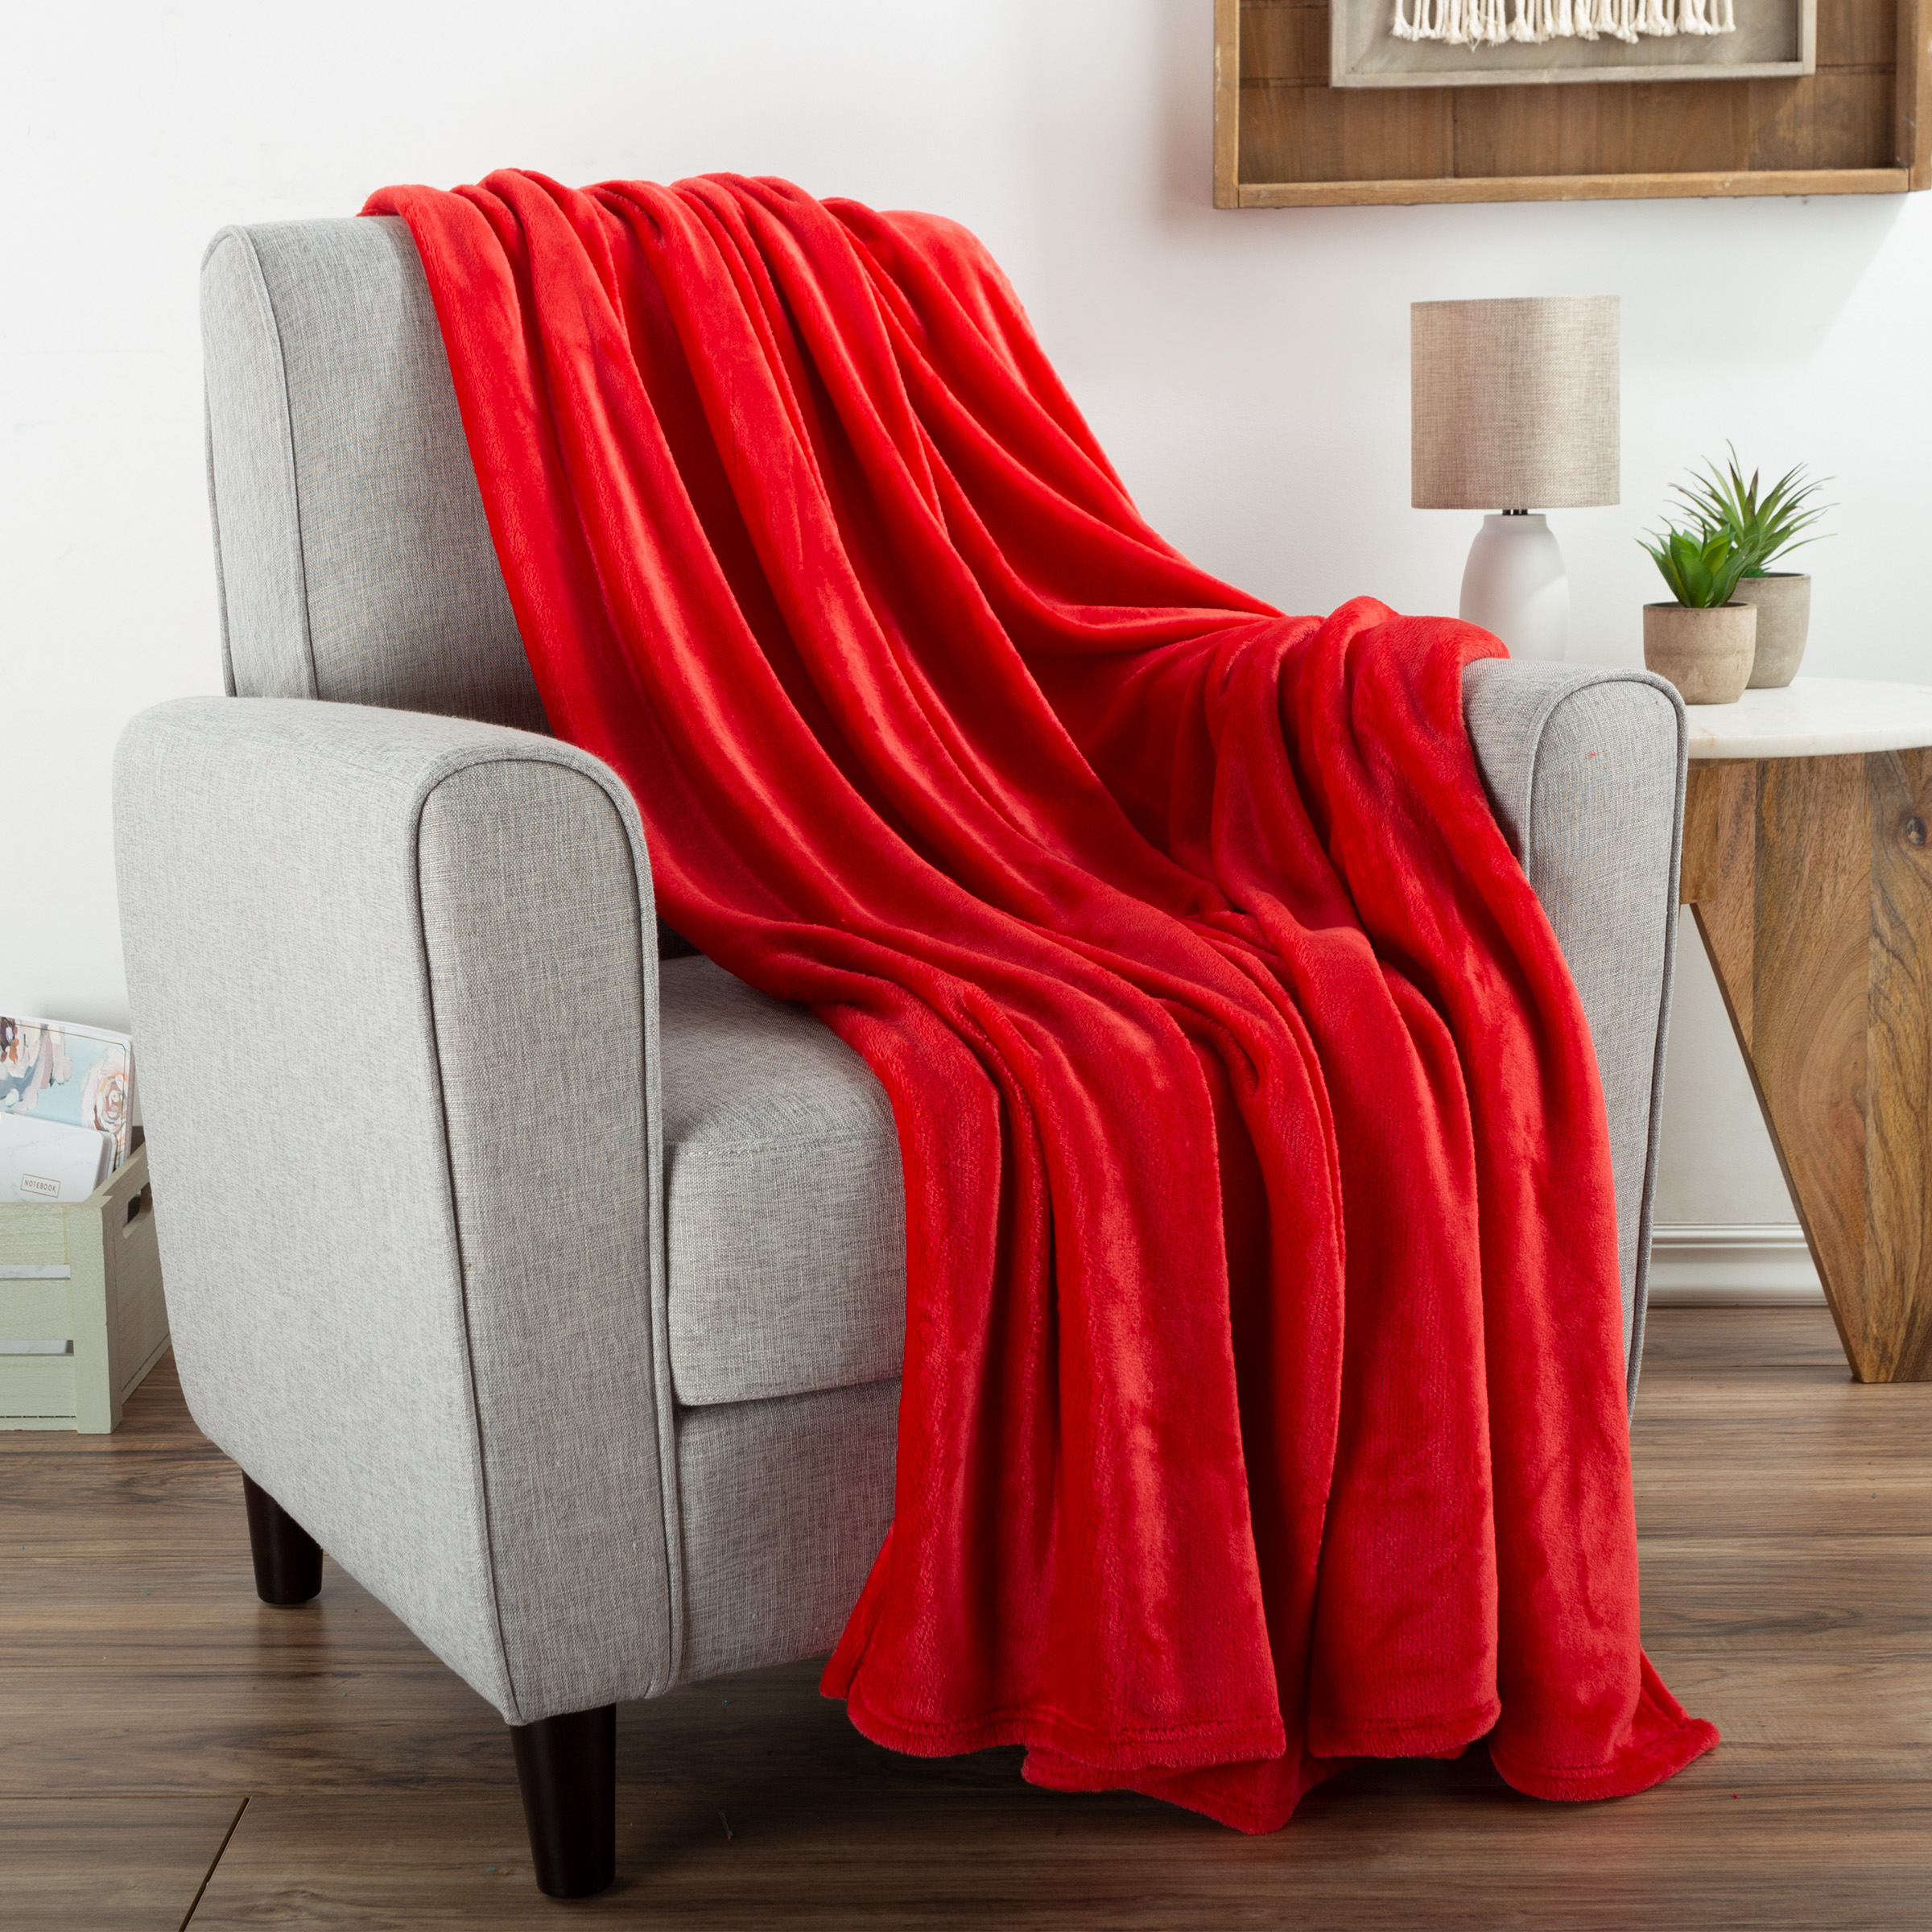 Fleece Throw Blanket- For Couch, Home Décor, Sofa & Chair- Oversized 60” X 70”- Lightweight, Soft & Plush Microfiber - Camel